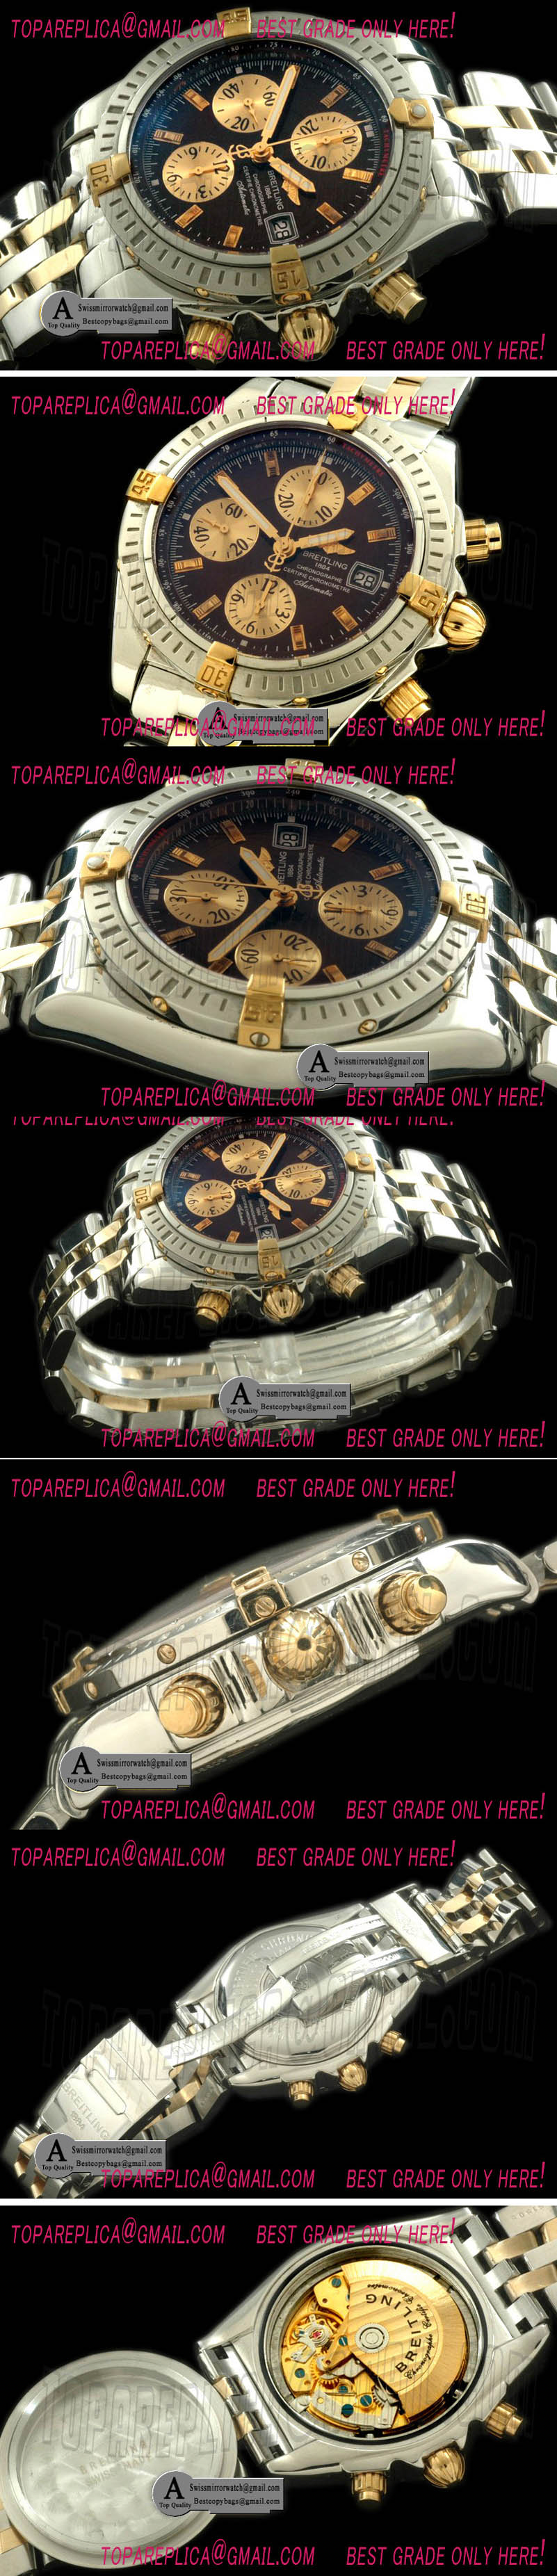 Replica Breitling Chronomat Evolution Watches